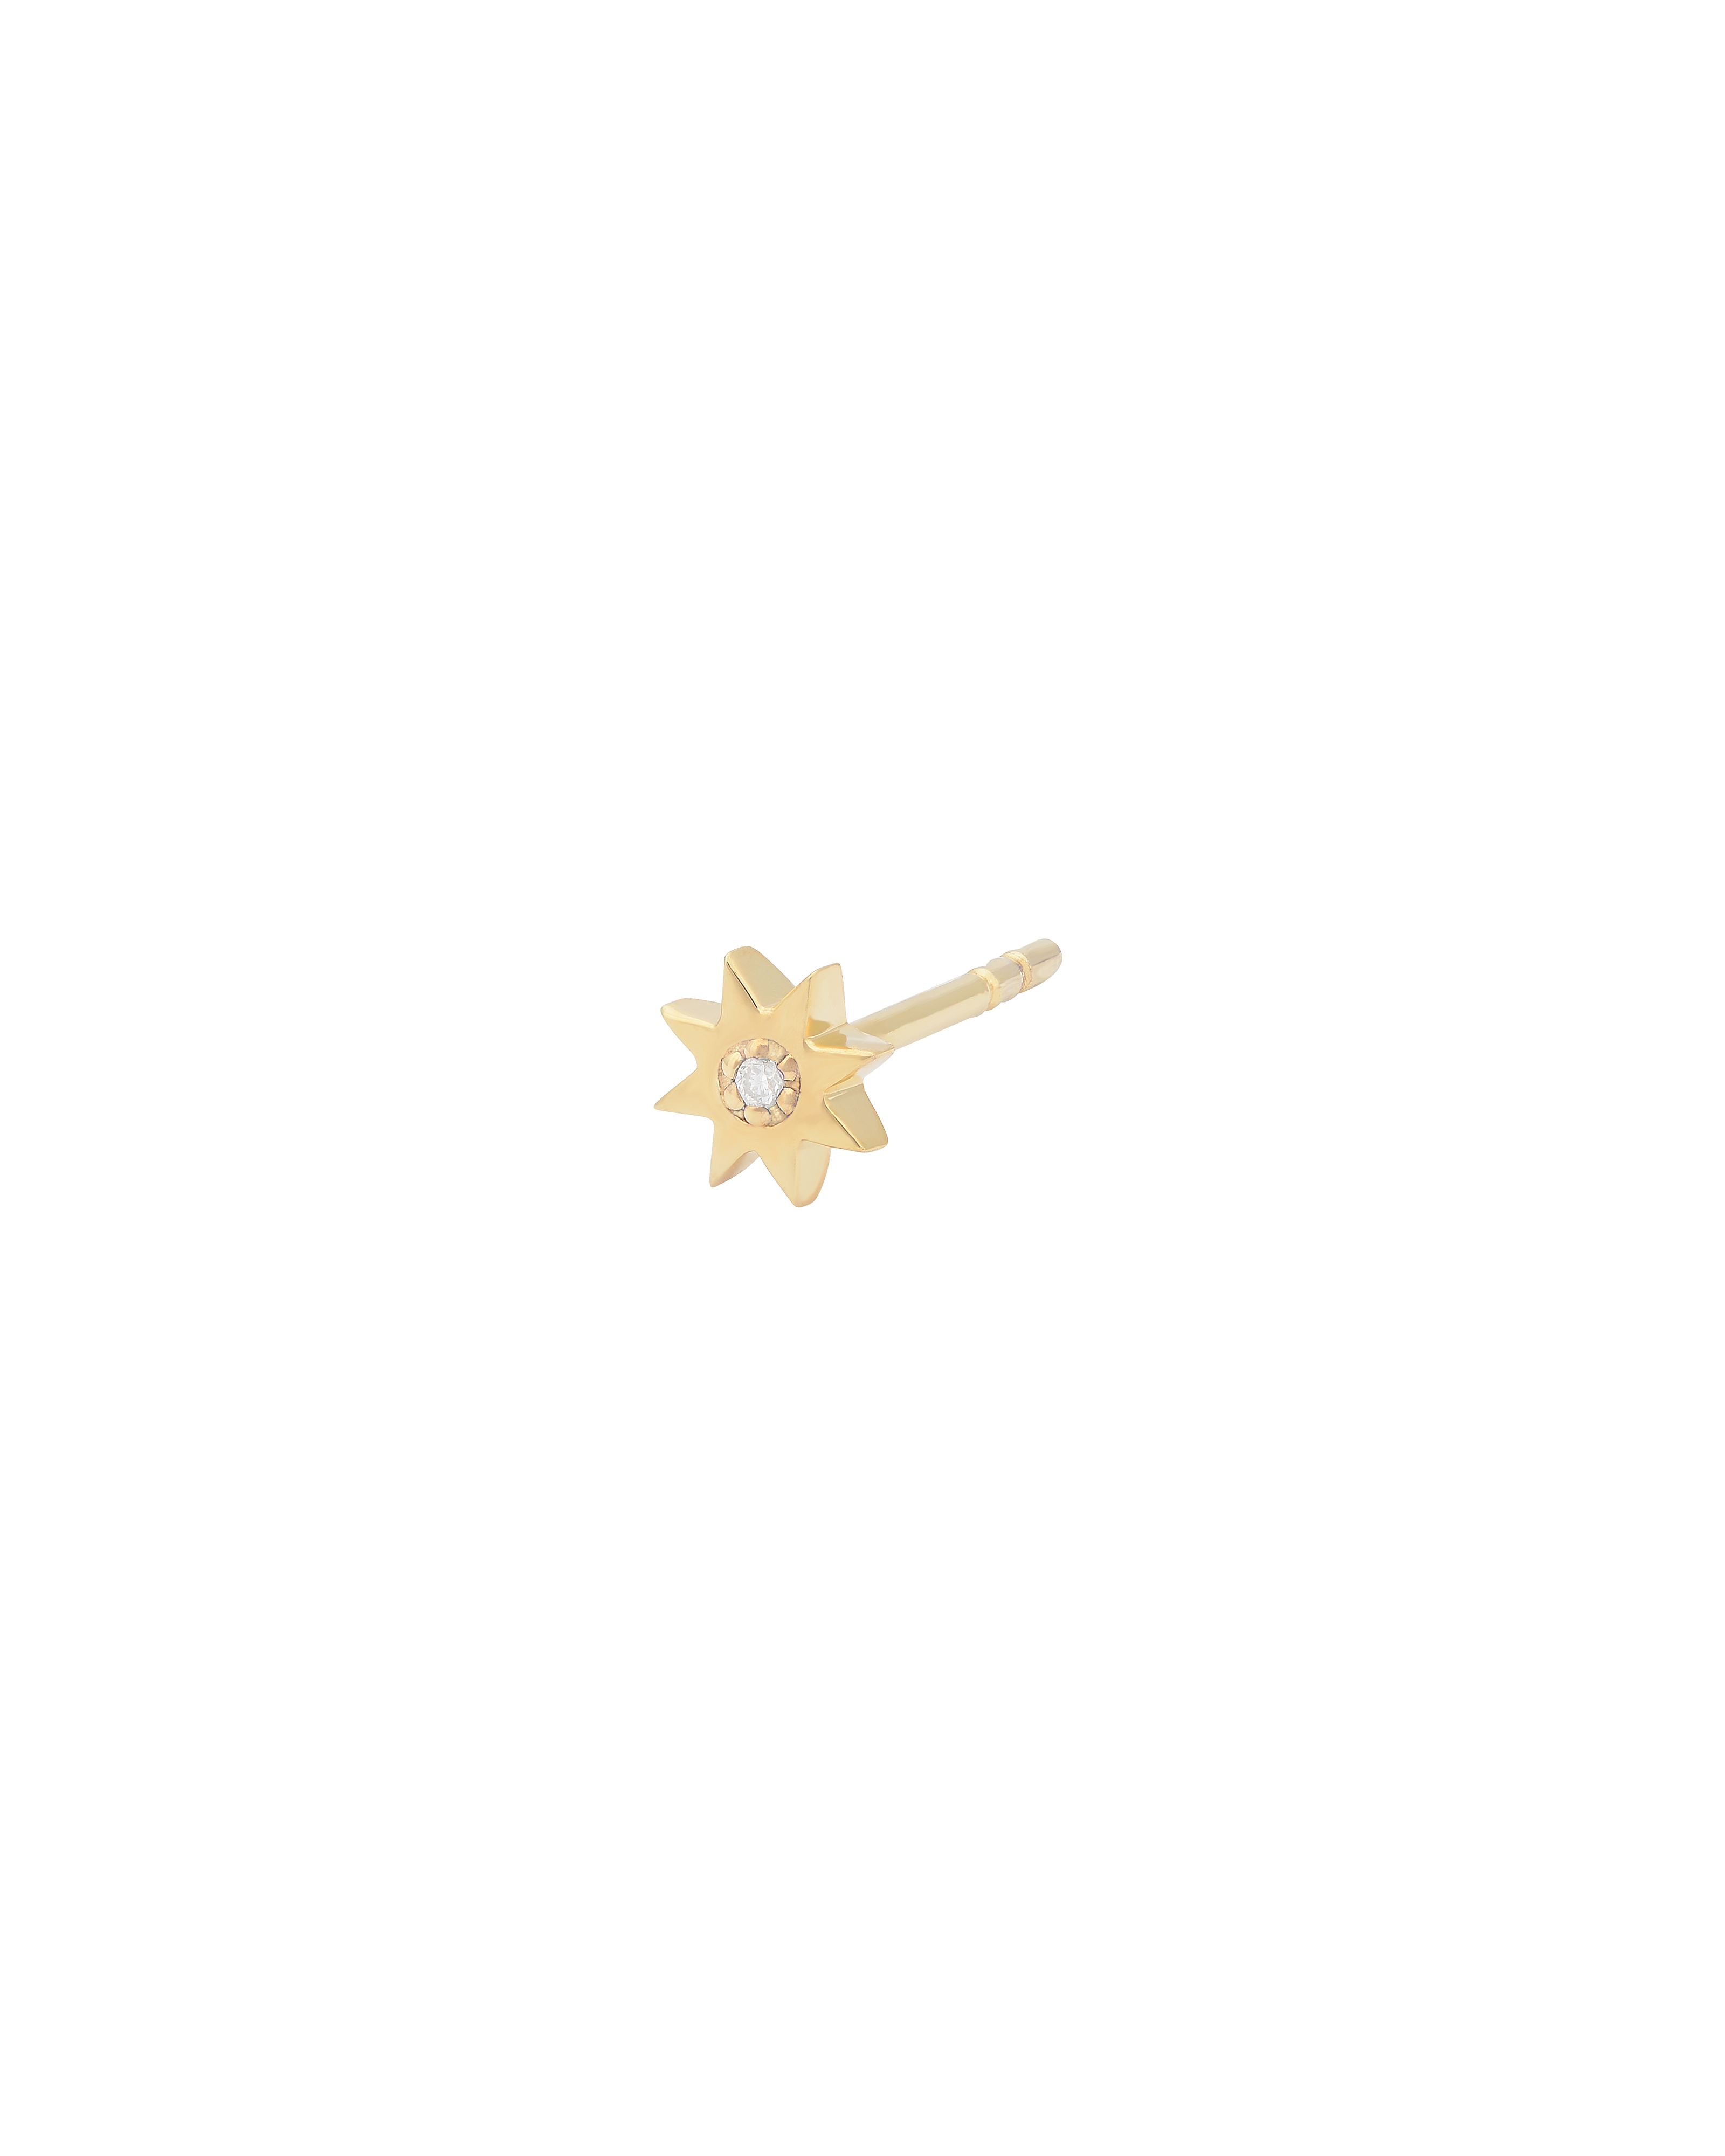    sener-besim-small-constellation-diamond-stud-gold-earrings